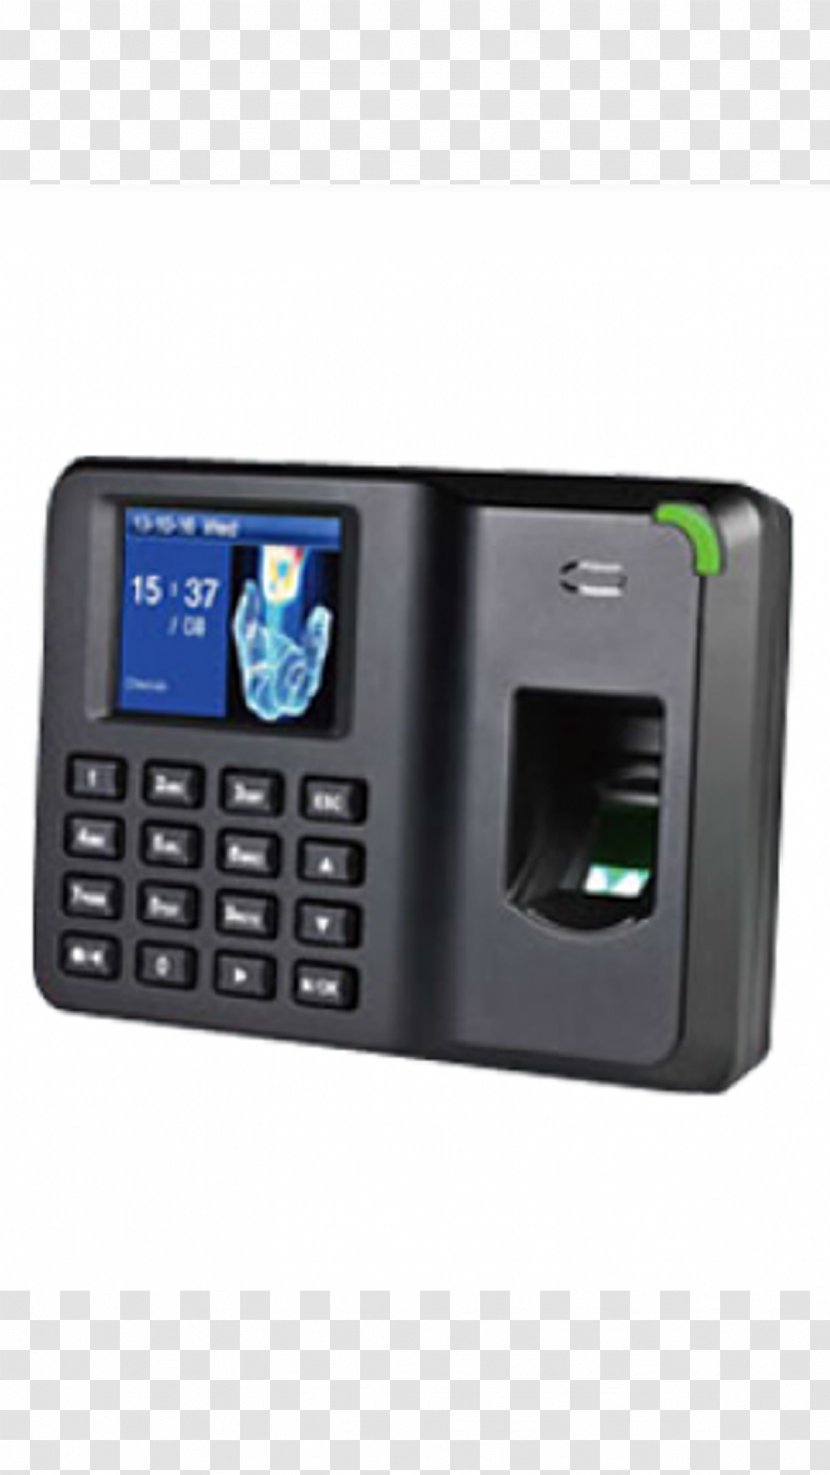 Mobile Phones Time & Attendance Clocks And Printer Access Control - Fingerprint Scanning Transparent PNG